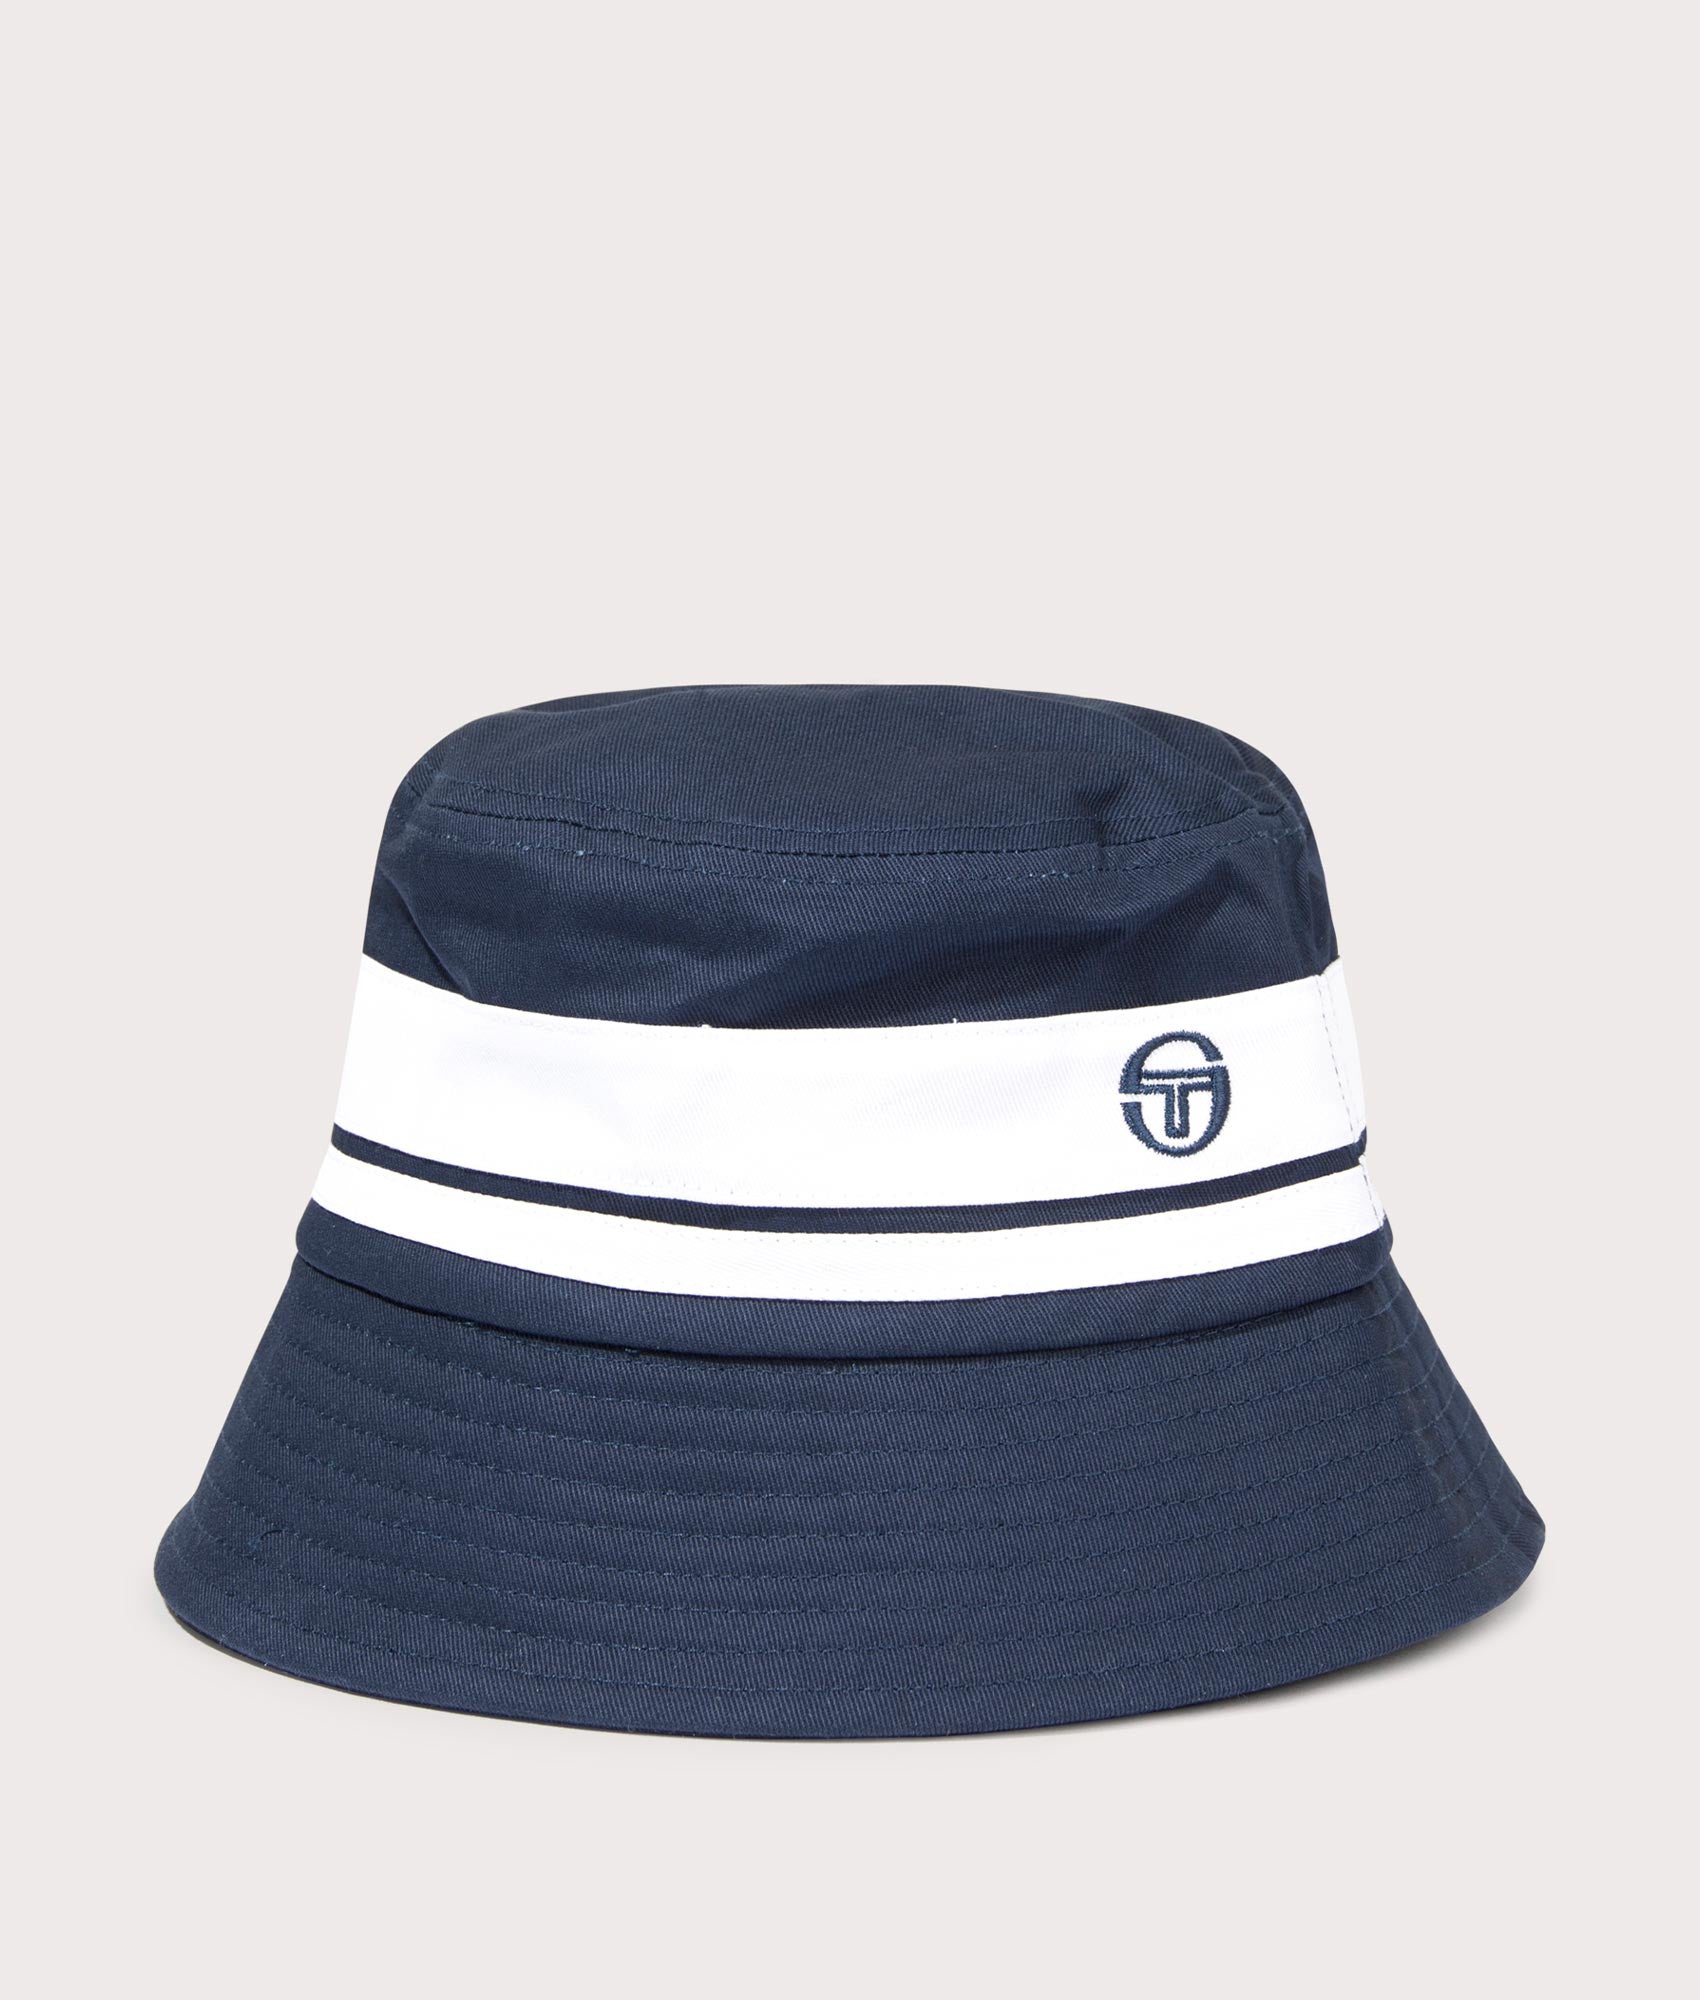 Sergio Tacchini Mens Newsford Bucket Hat - Colour: 241 Maritime Blue/White - Size: One Size